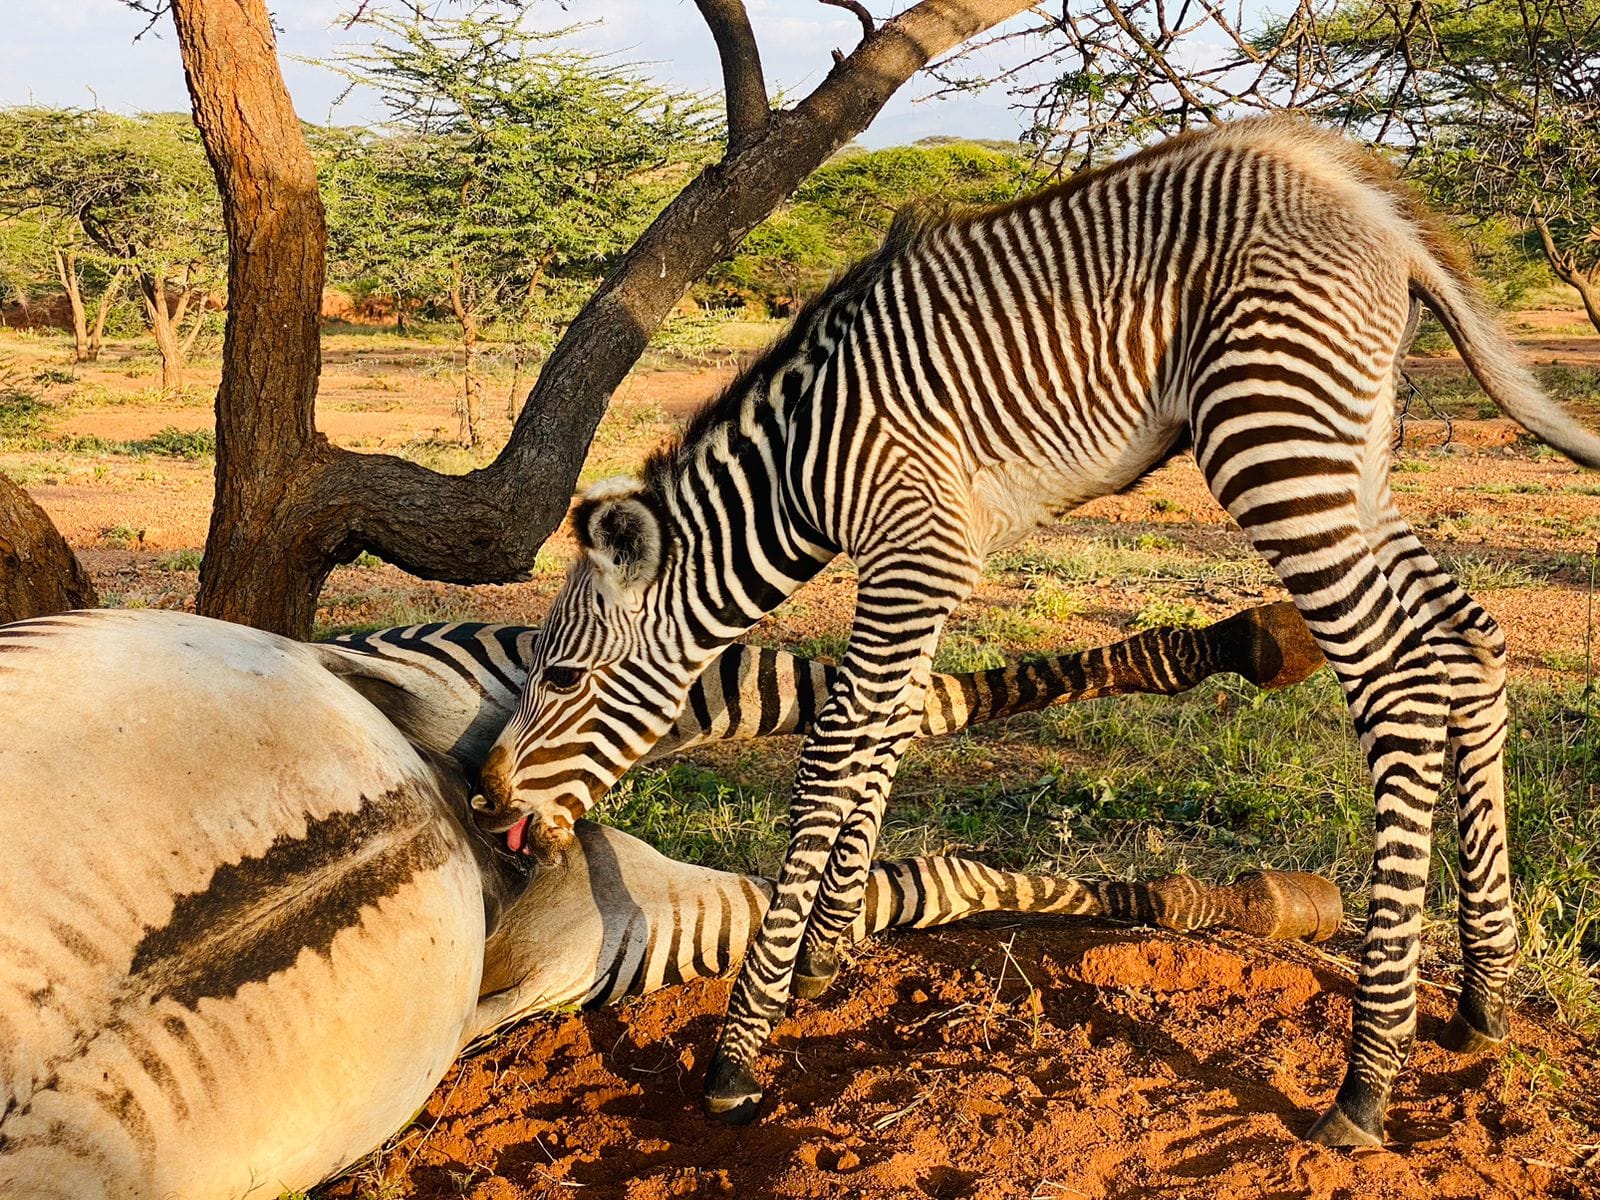 An infant Grevy's Zebra suckling on its mother's carcas in Samburu.